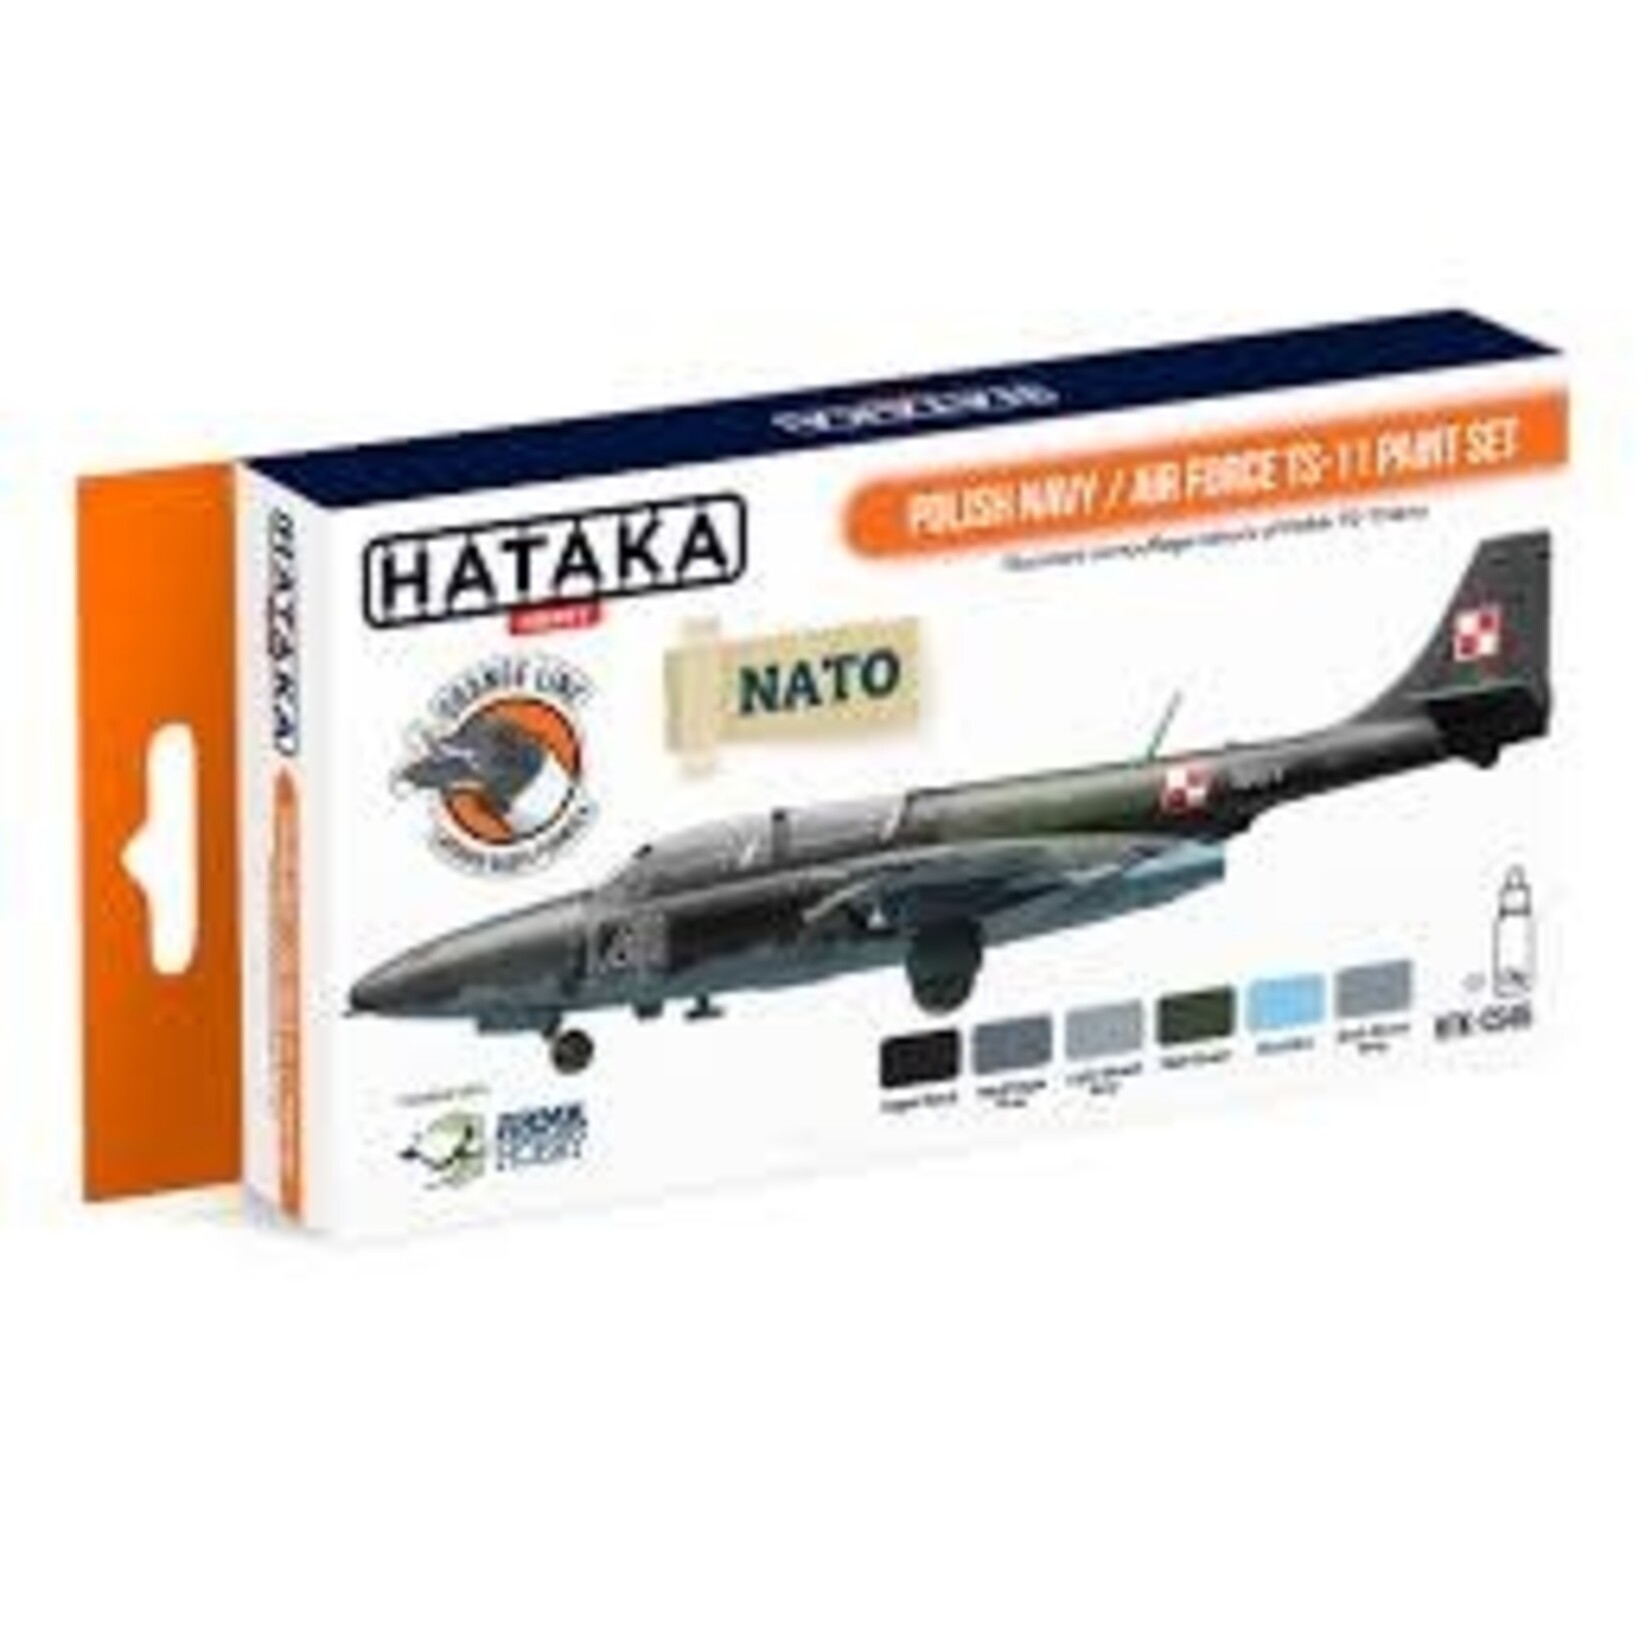 Hataka 46 Polish Navy - Airforce  Paint Set